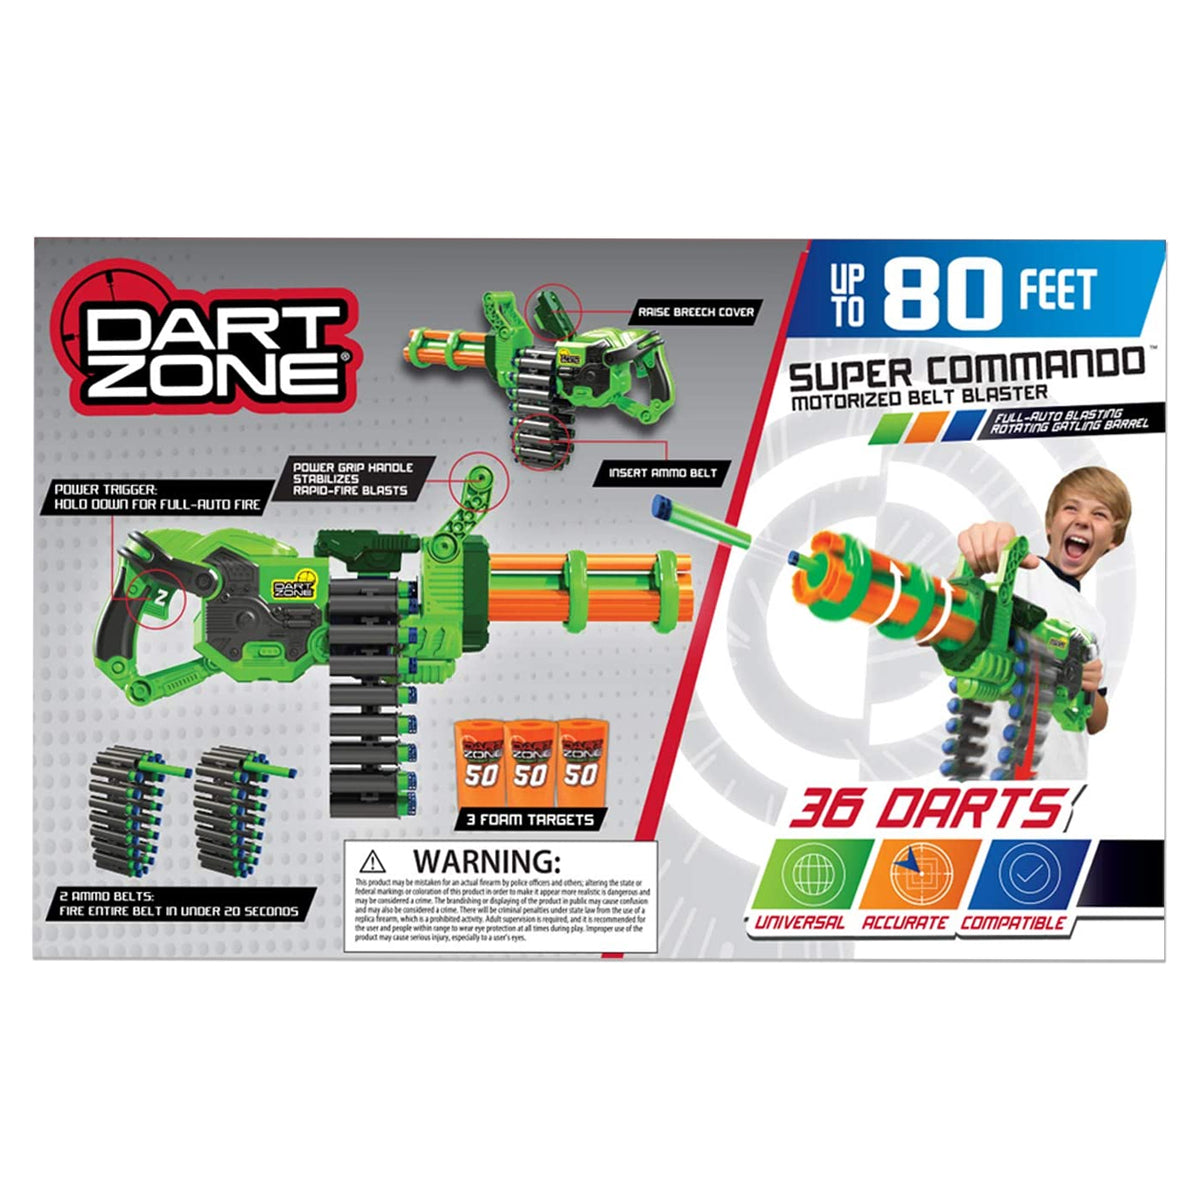 2pk Dart Zone Super Commando Toy - Motorized Belt Blaster